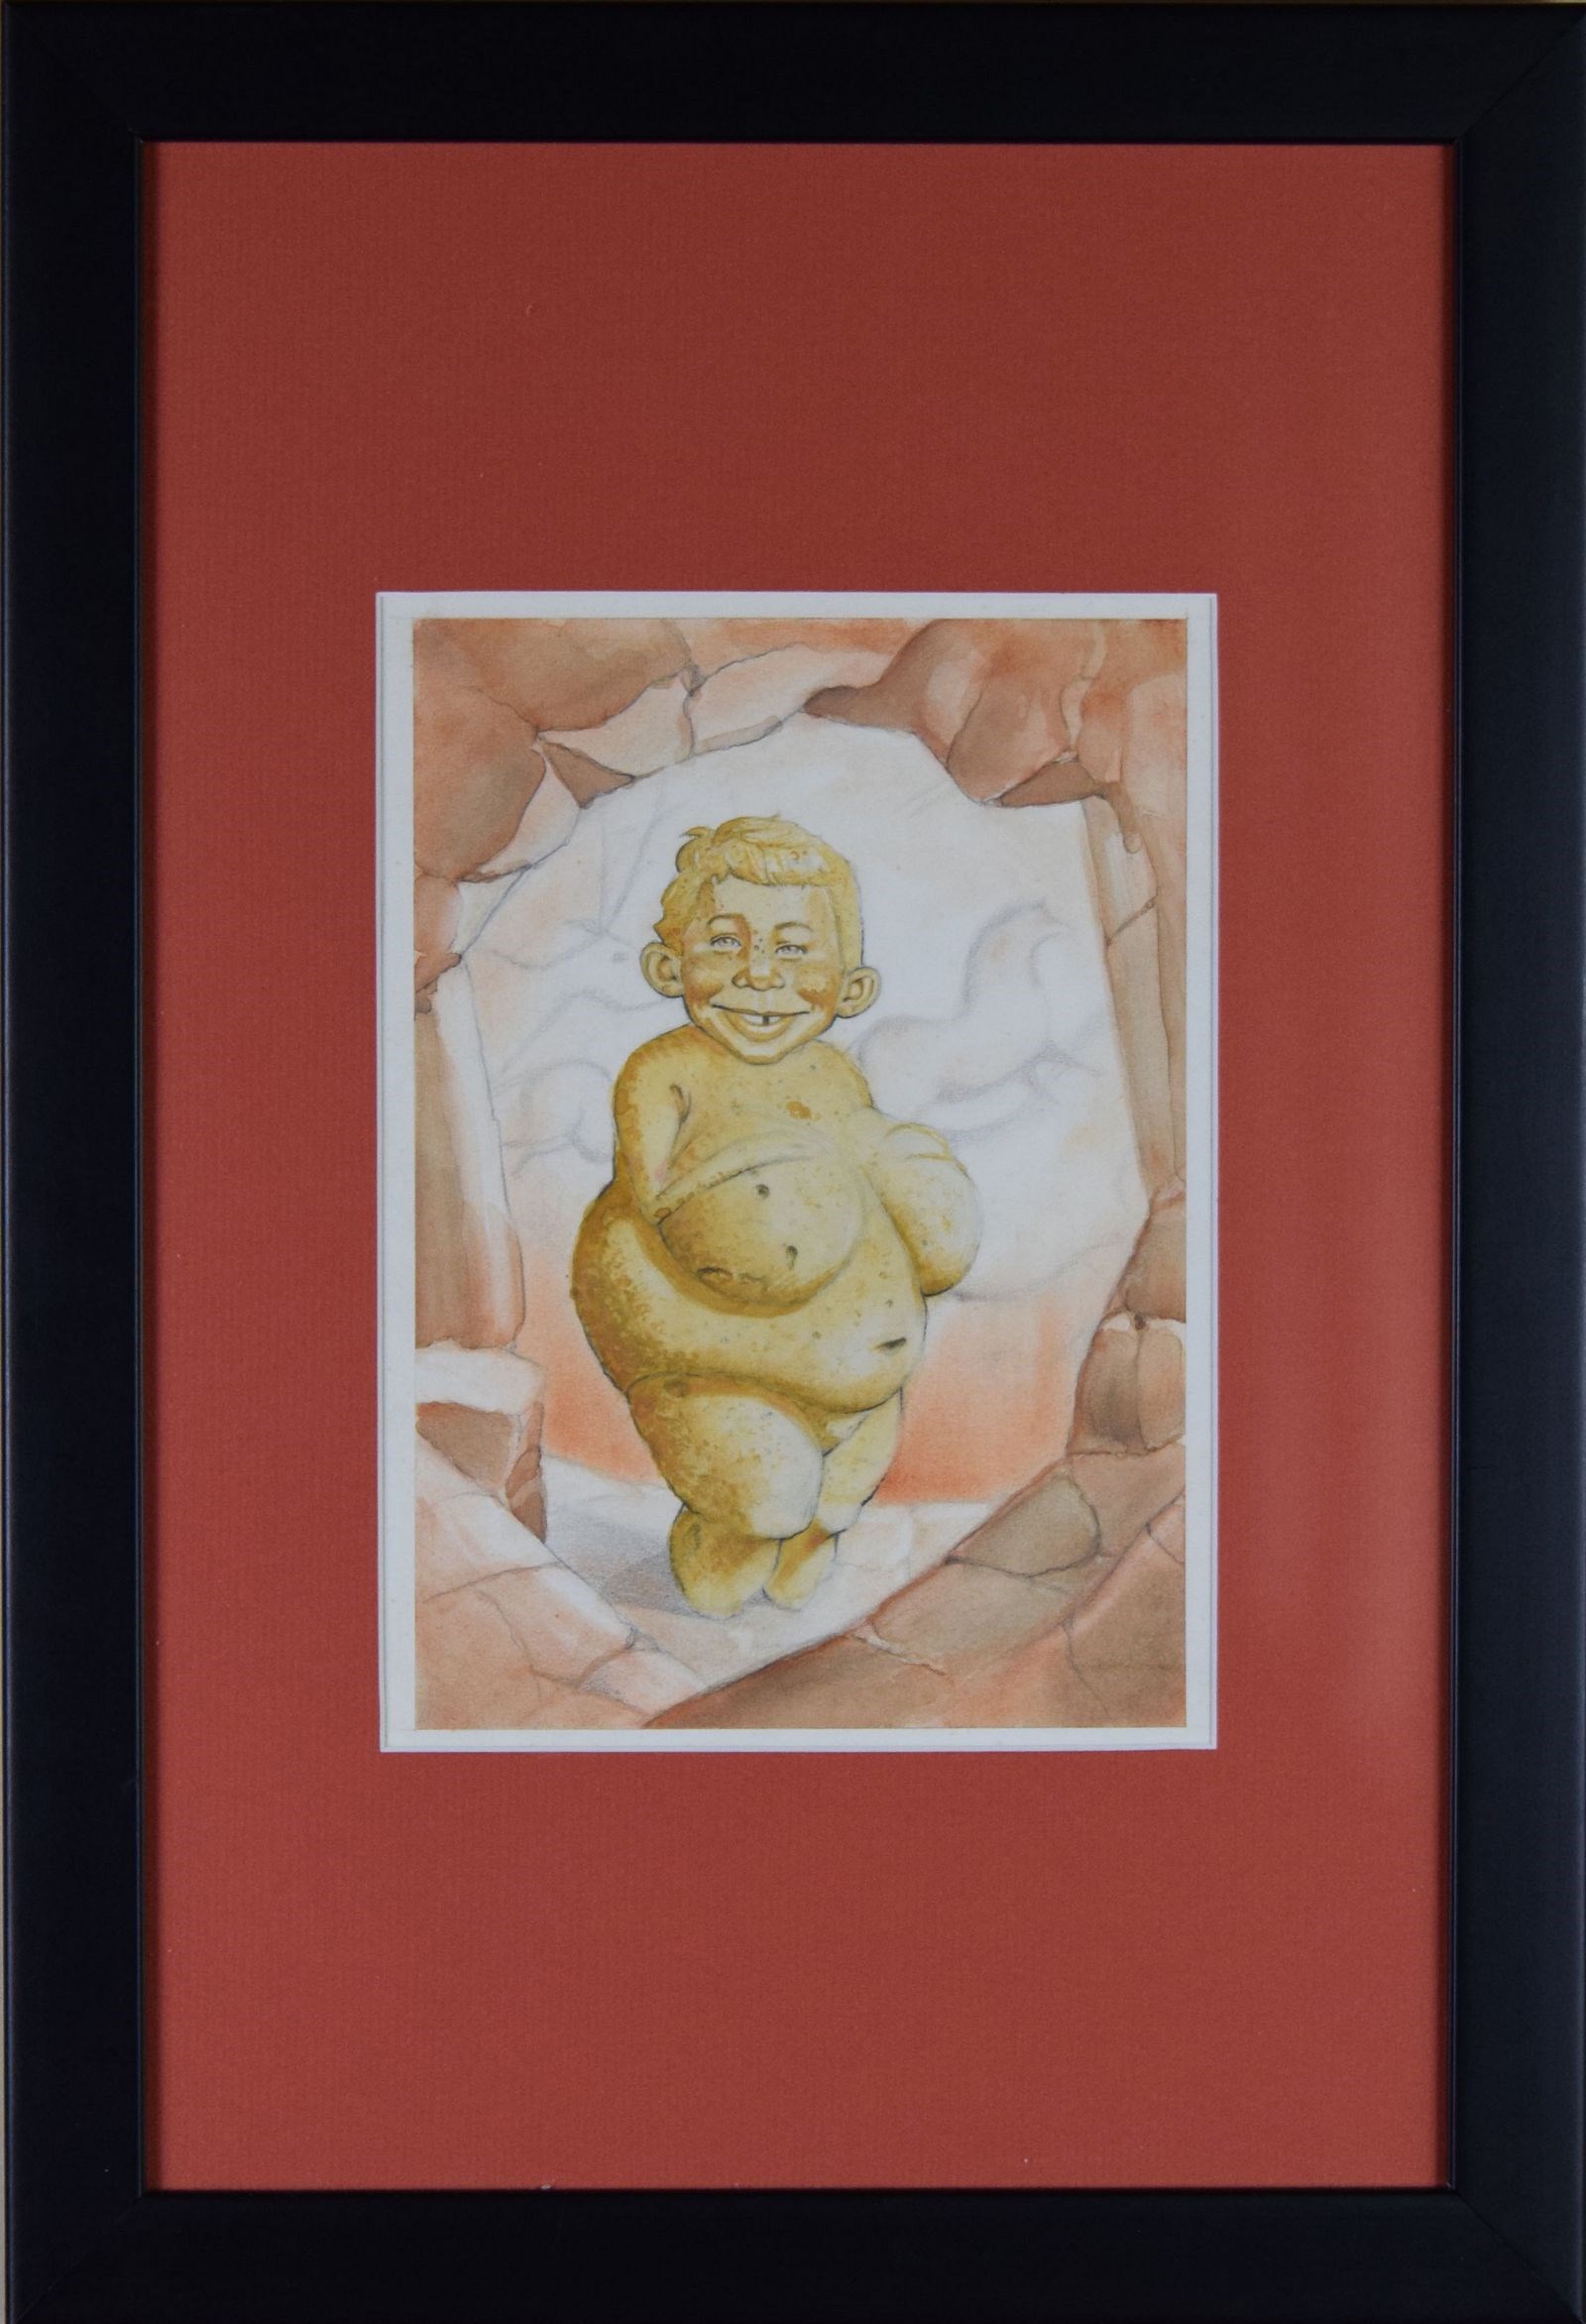 MAD Magazine Original Art of "The Venus of Willendorf" Neuman (Germany) by Artist Gregor Mecklenburg